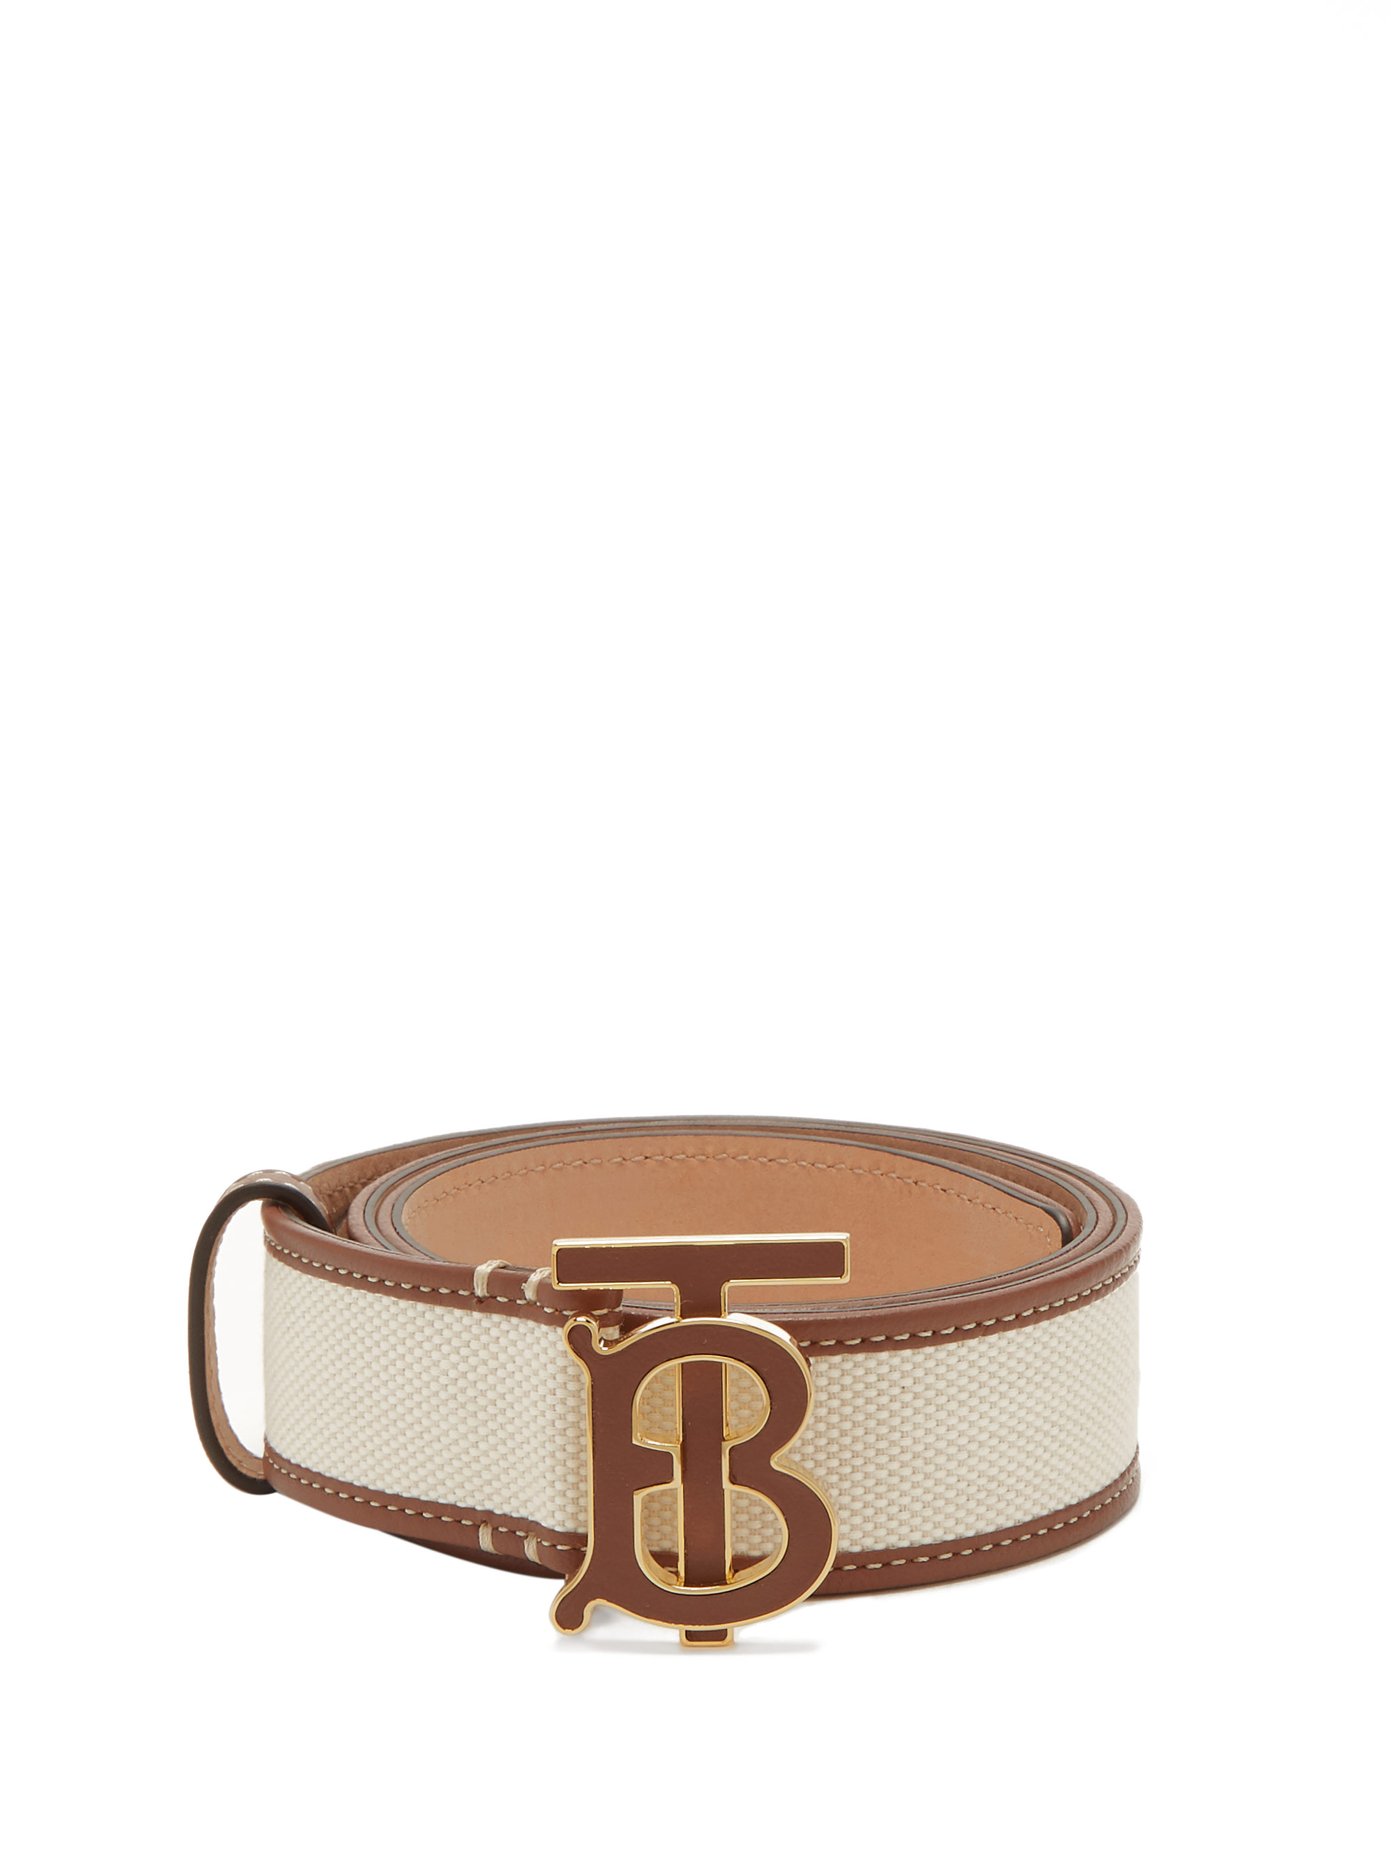 burberry belt uk